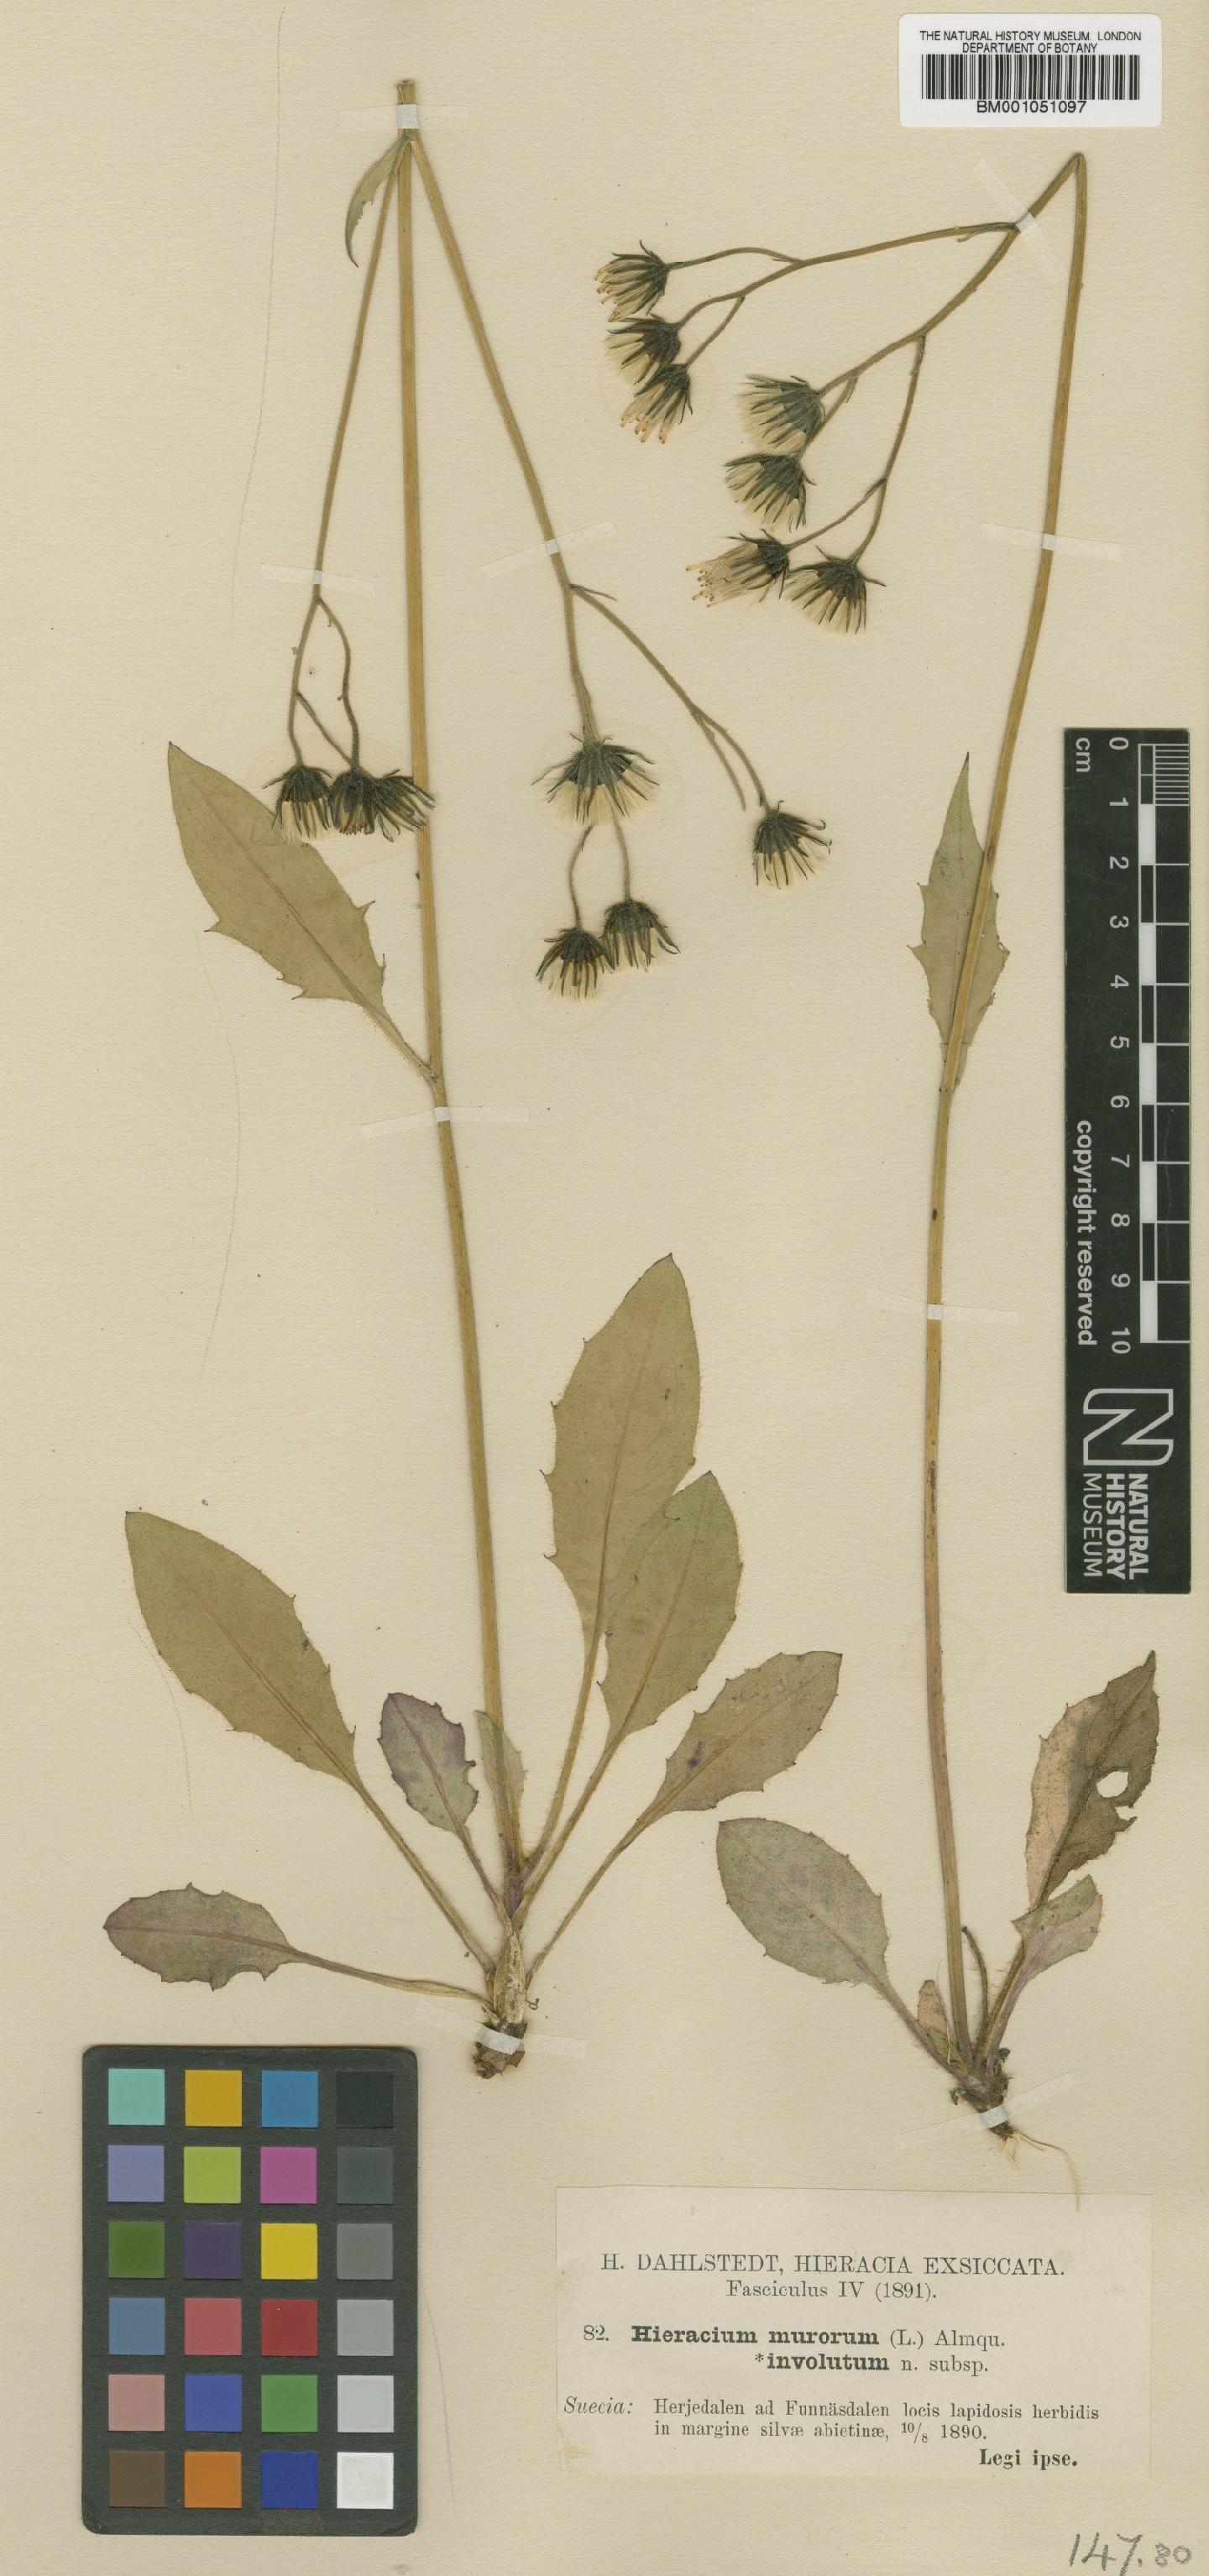 To NHMUK collection (Hieracium caesium subsp. involutum (Dahlst.) Zahn; TYPE; NHMUK:ecatalogue:2421307)